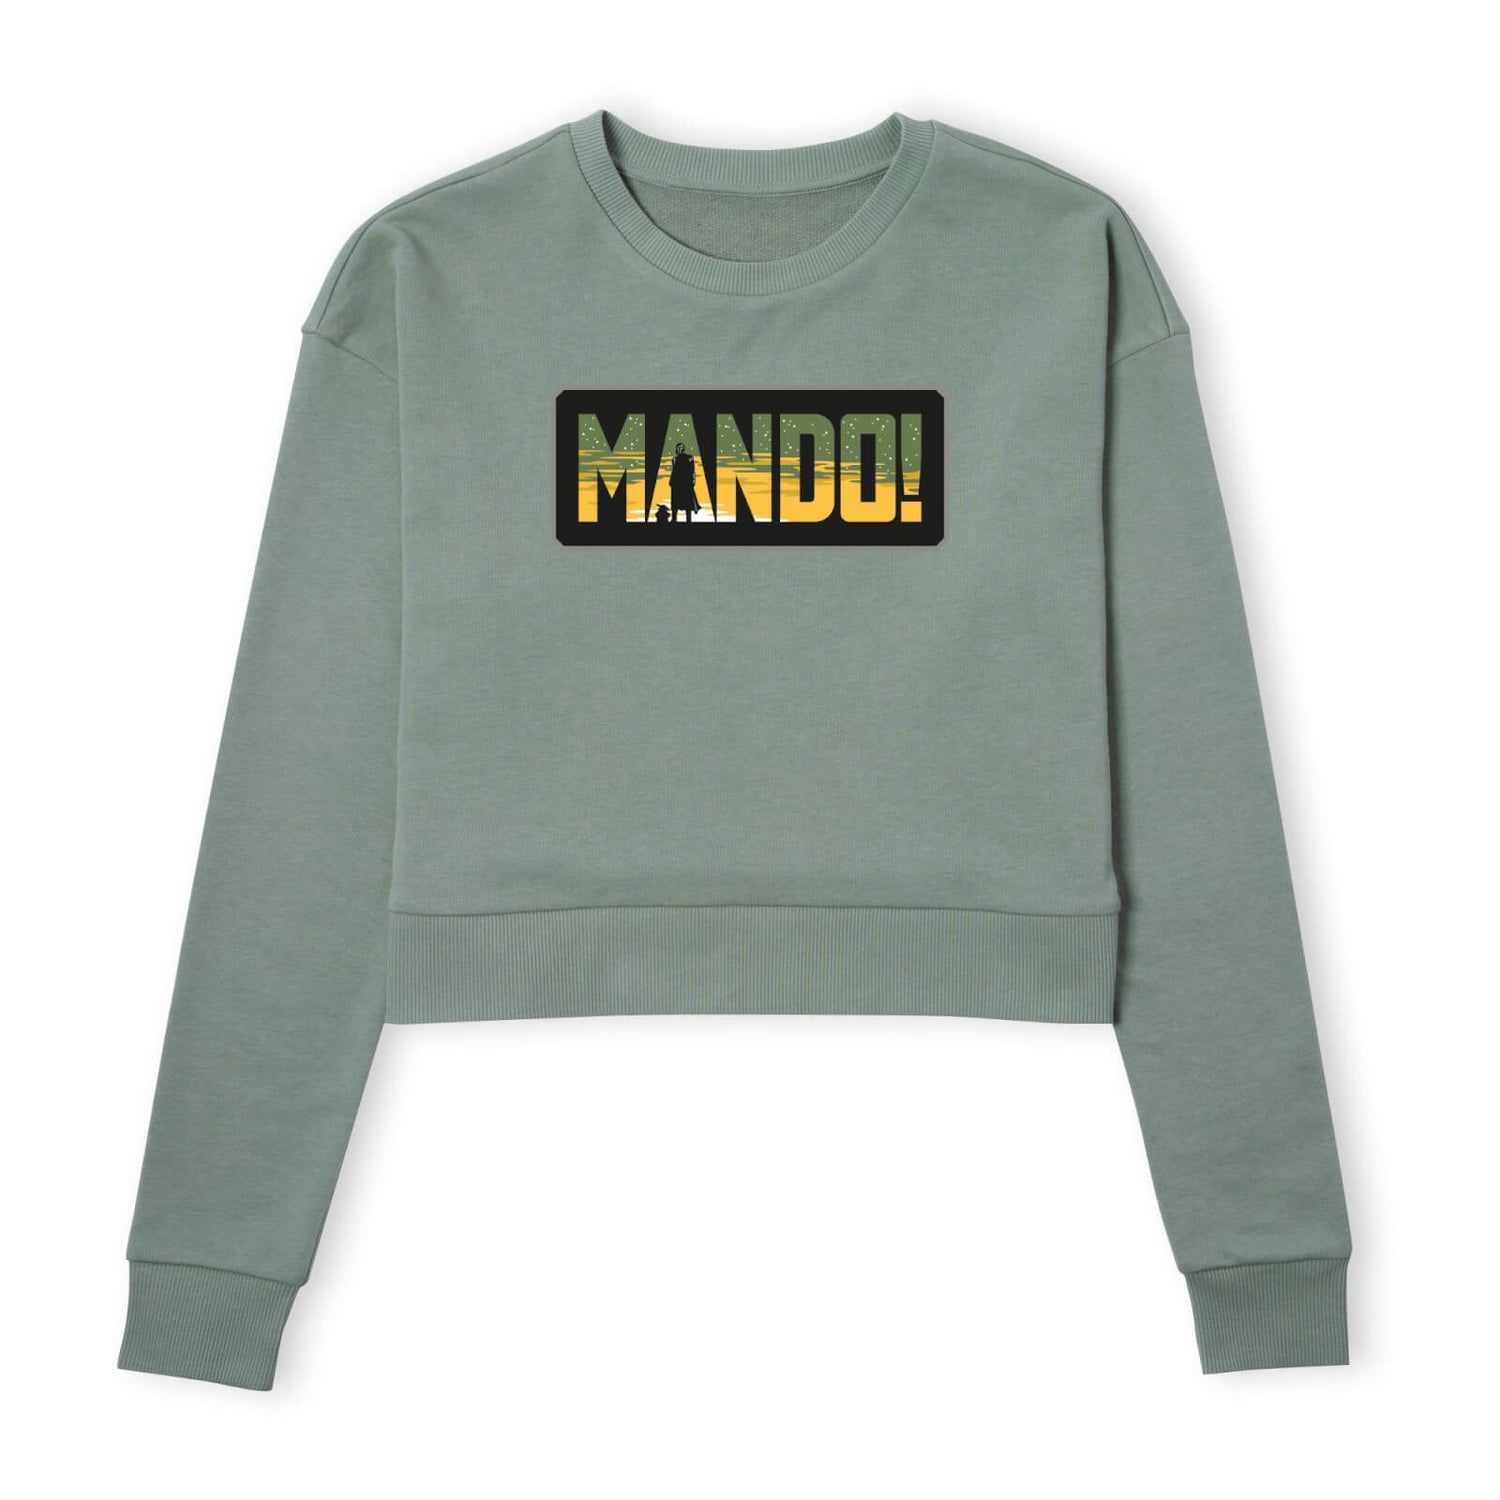 Star Wars The Mandalorian Mando! Women's Cropped Sweatshirt - Khaki